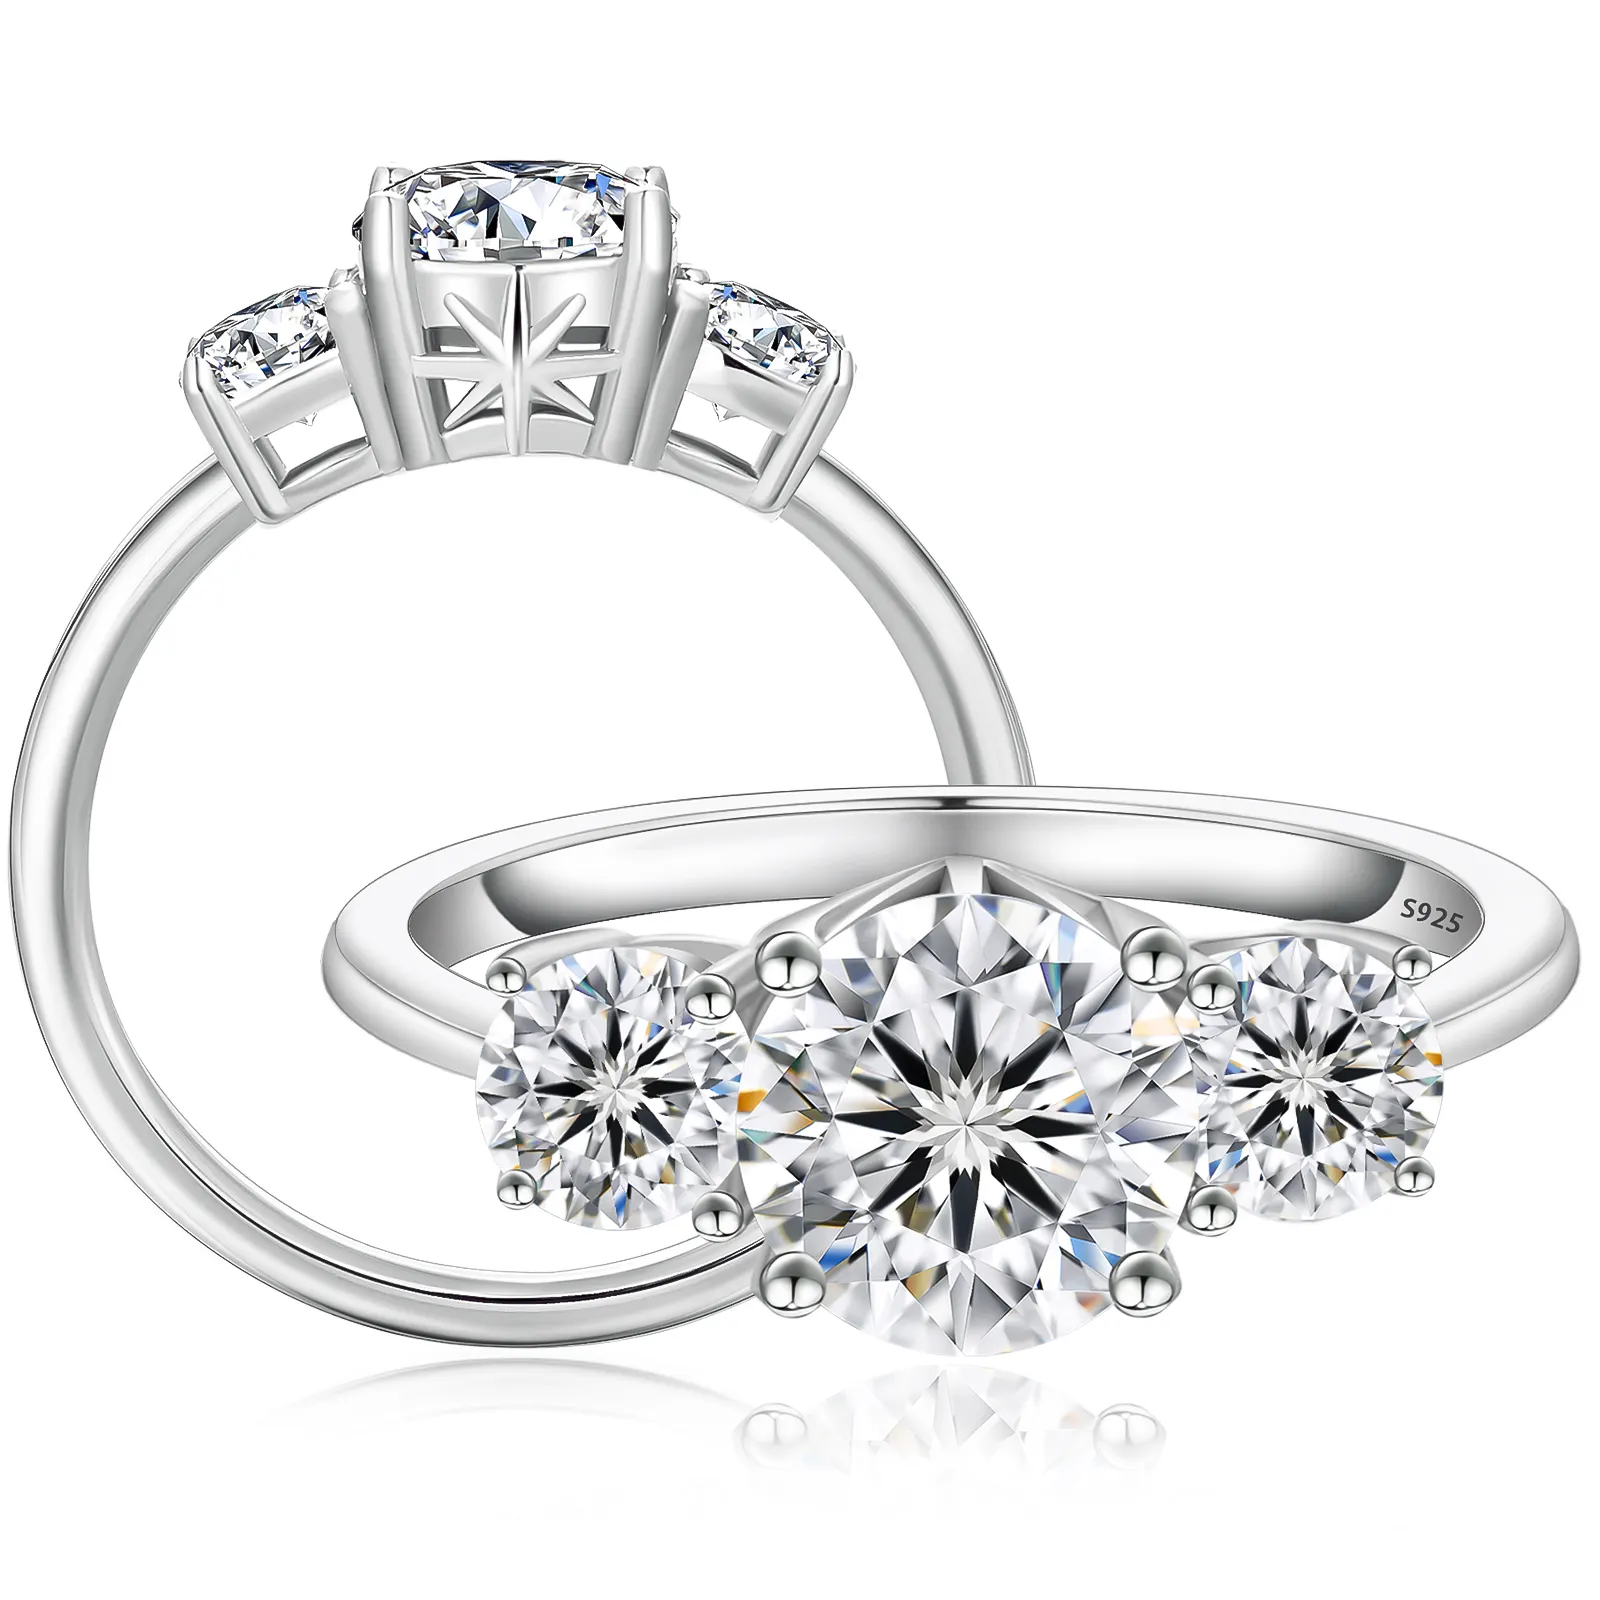 18K putih berlapis emas 925 perak murni cincin janji pernikahan potongan bulat VVS1 Moissanite 3 cincin pertunangan batu